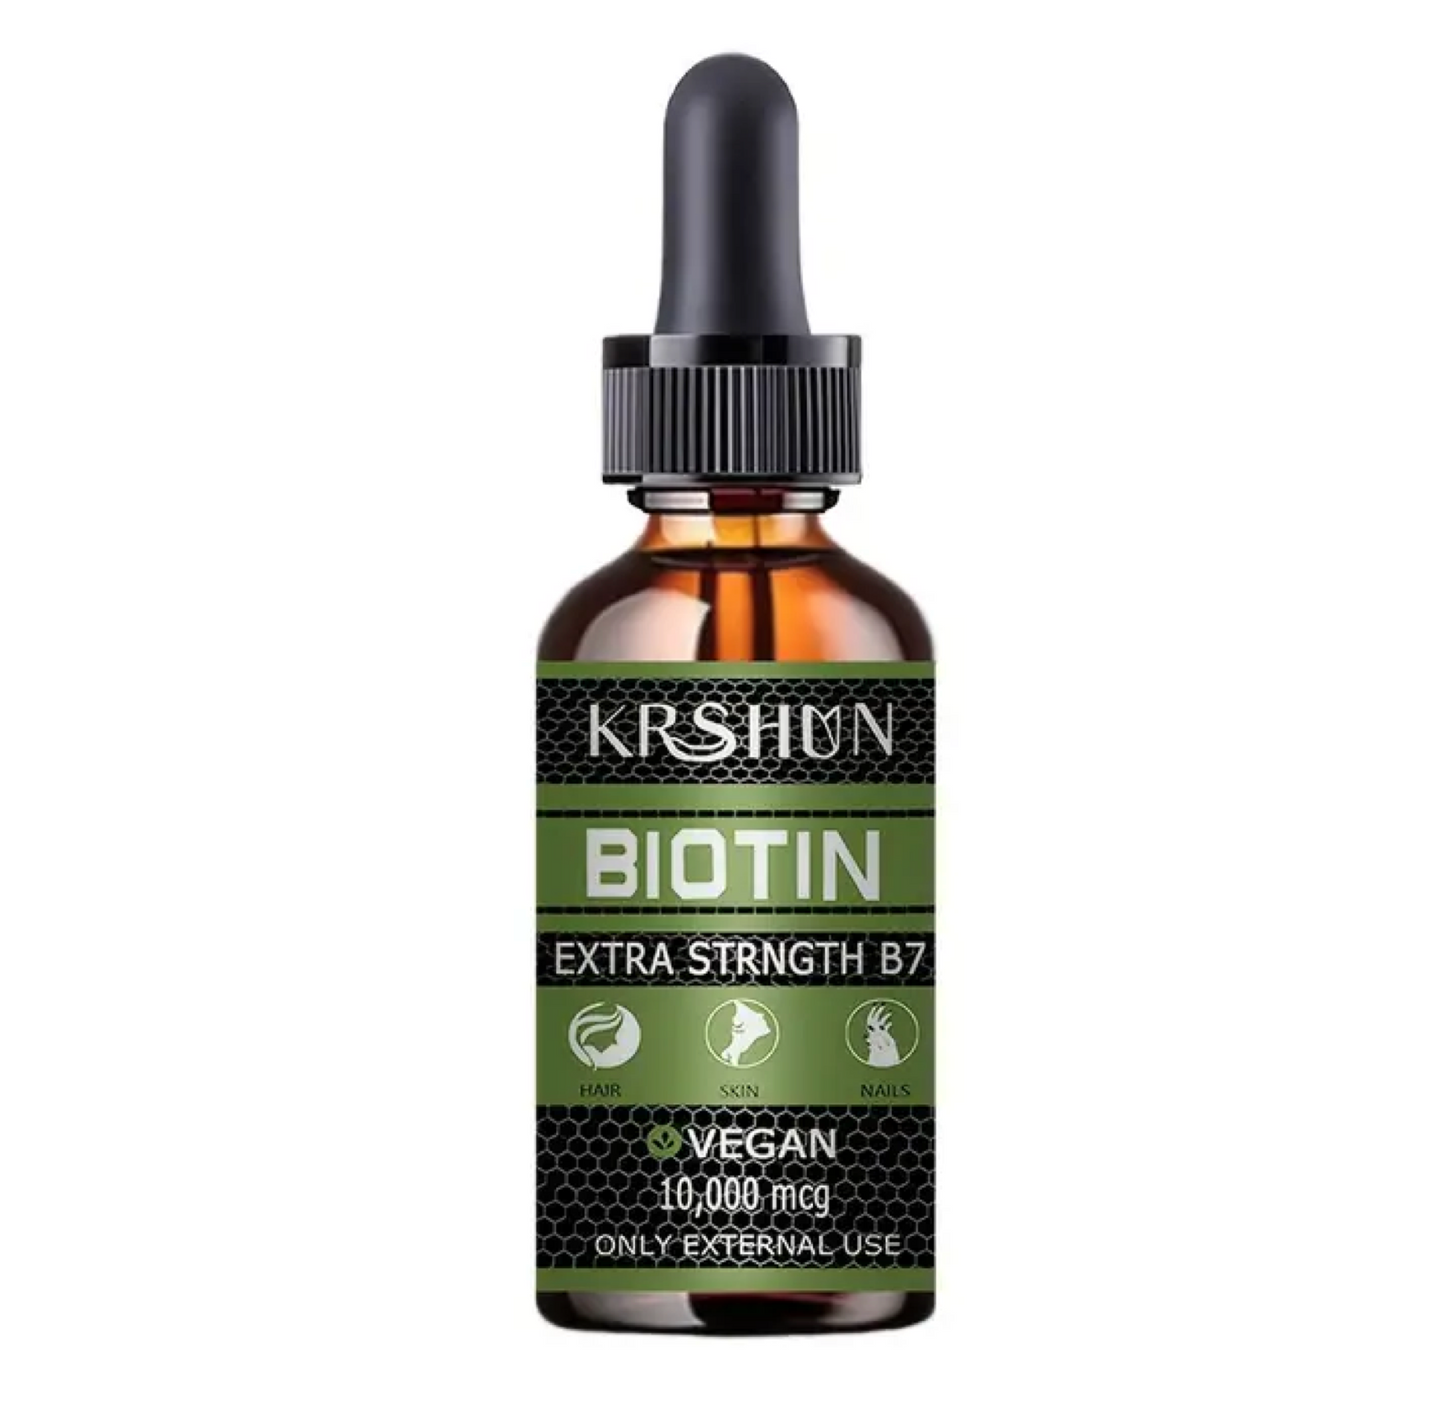 Krshun Biotin Extra Hair Growth Strength B7 50ml